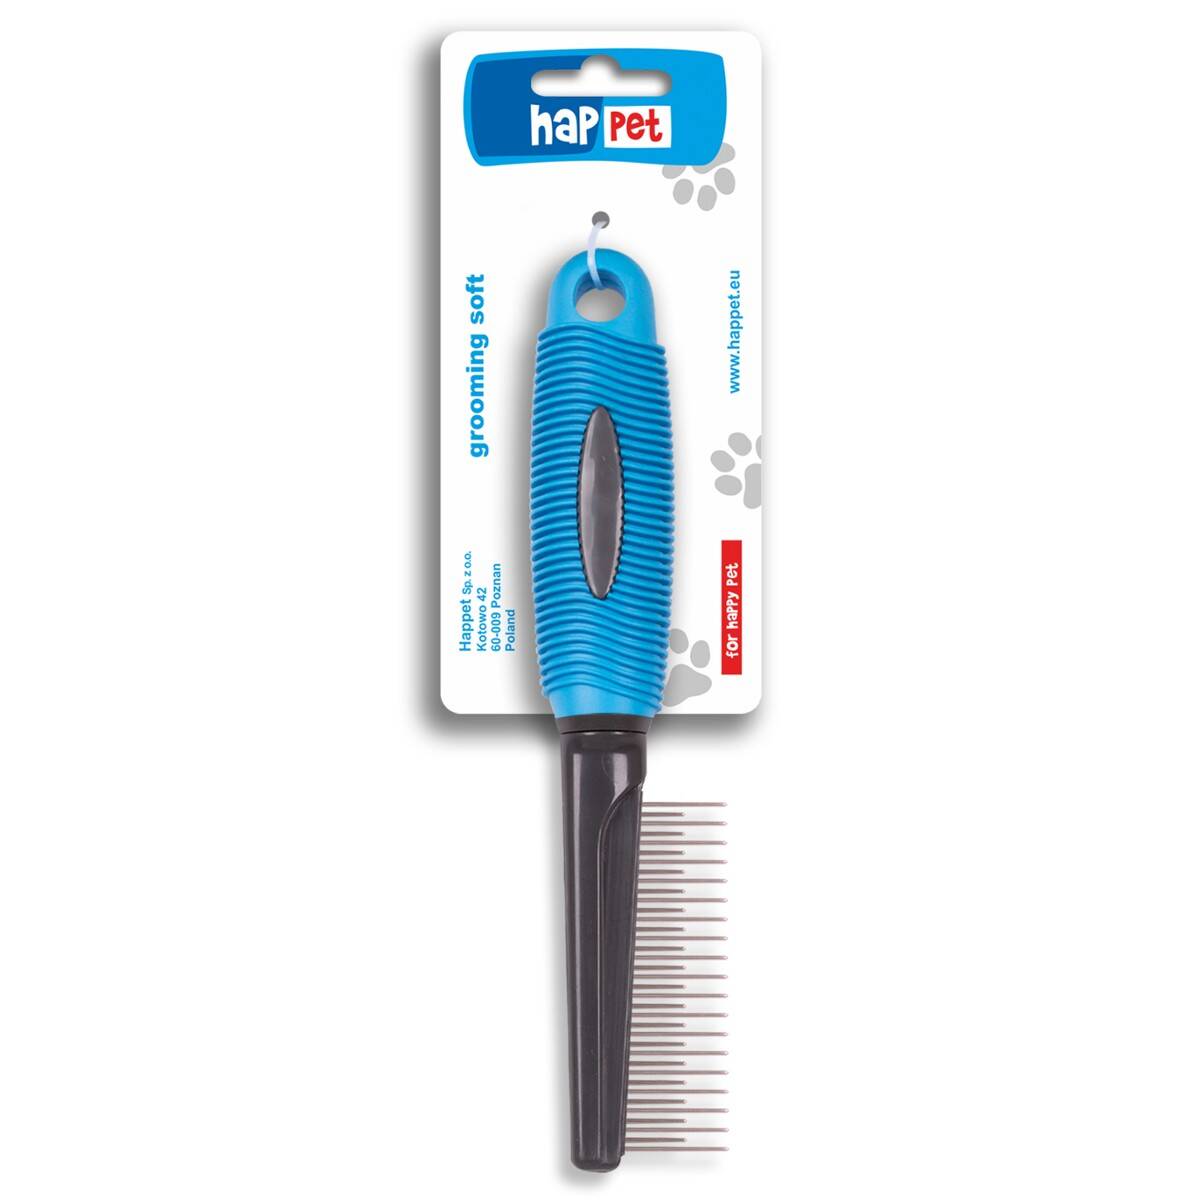 Comb - dense, double graded brush length Soft Happet GS18